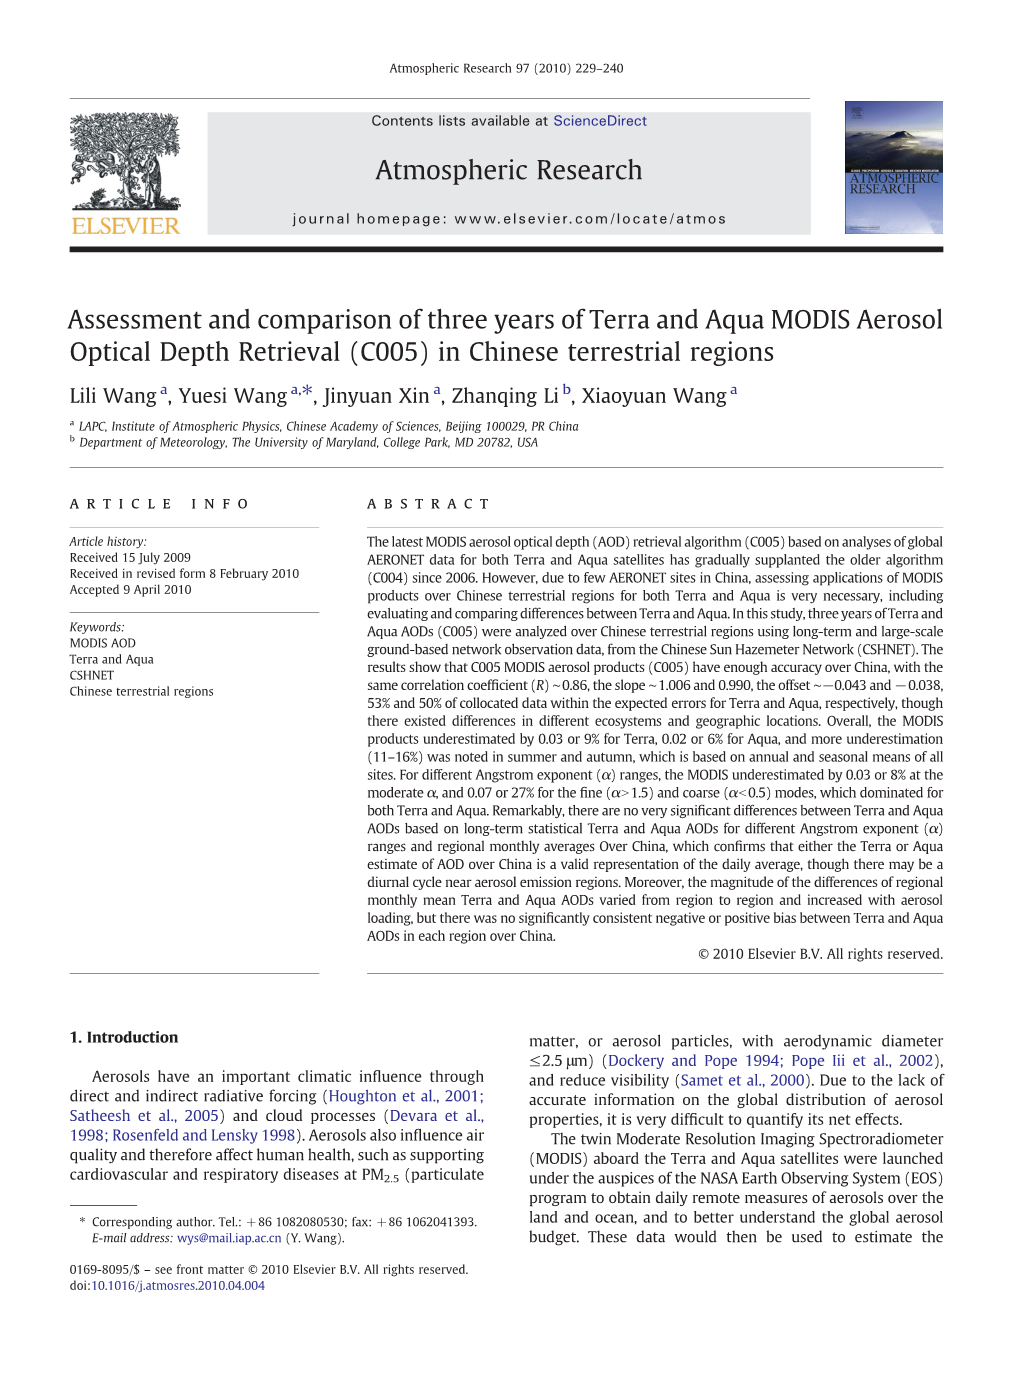 Assessment and Comparison of Three Years of Terra and Aqua MODIS Aerosol Optical Depth Retrieval (C005) in Chinese Terrestrial Regions